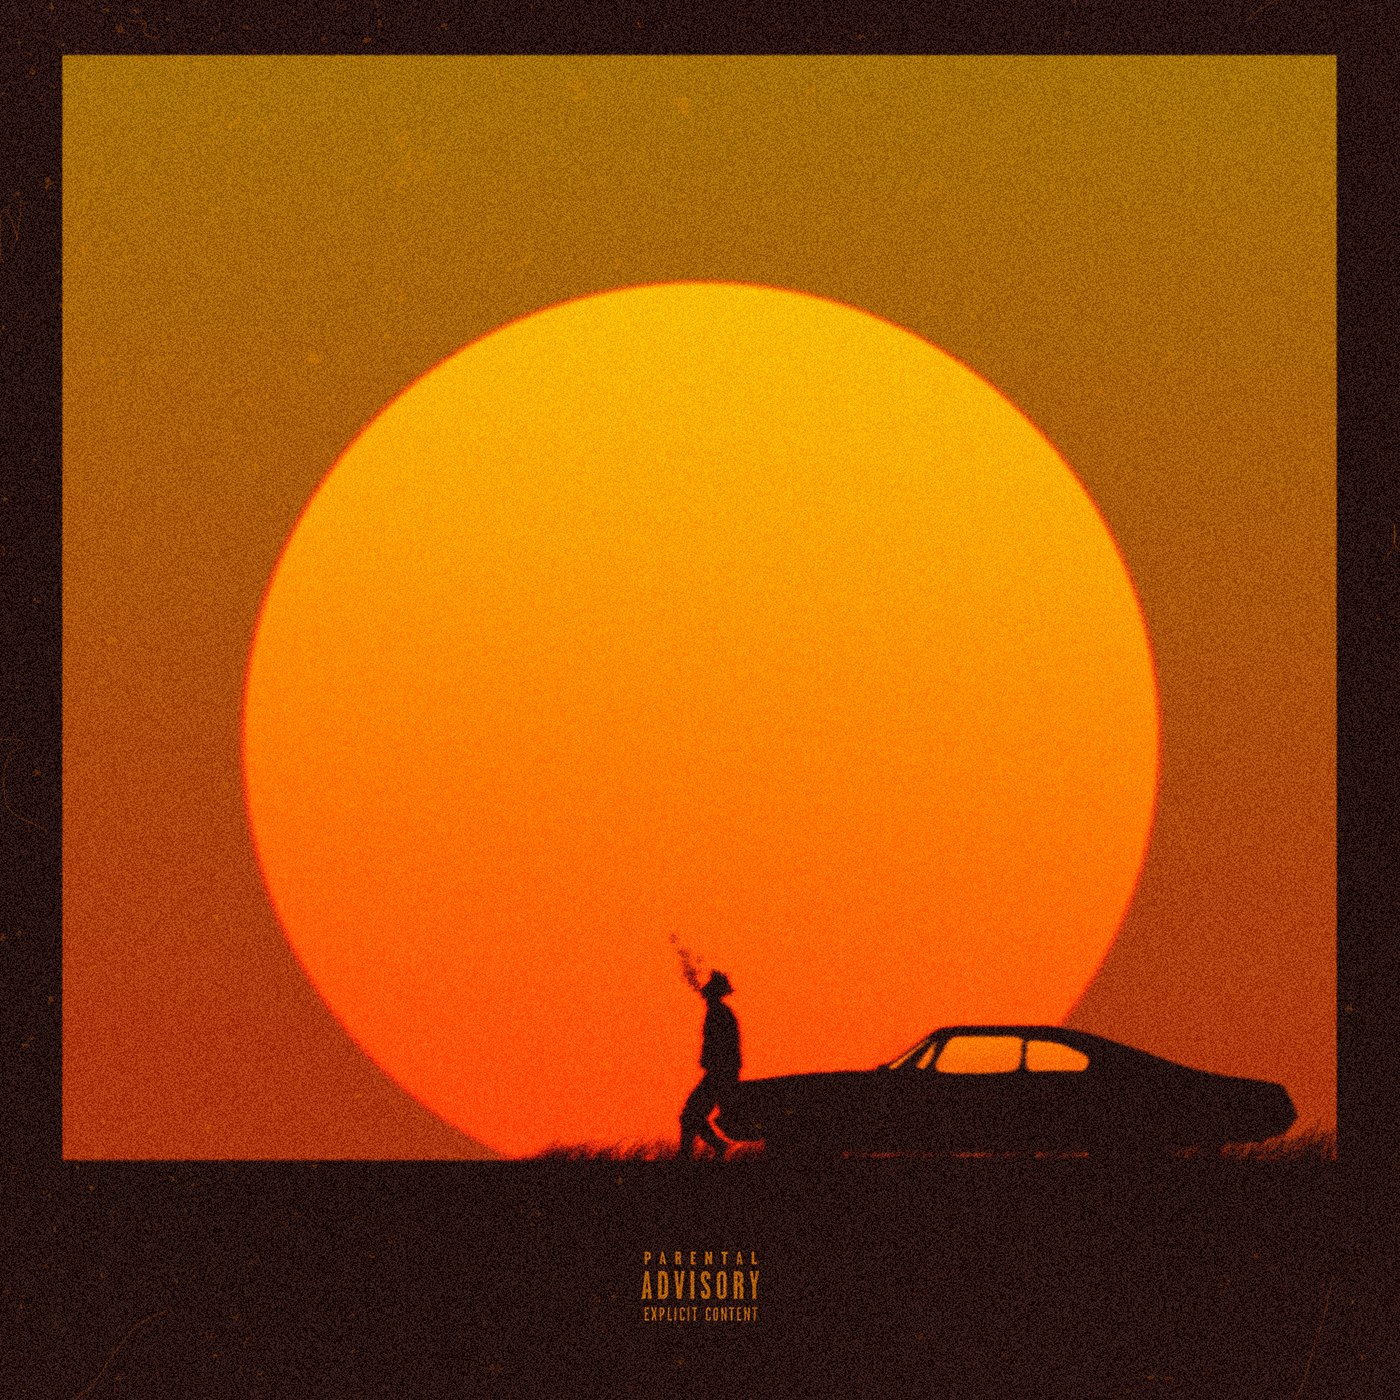 tde isaiah rashad top dawg entertainment hiphop rap Album cover the suns tirade music Silhouette